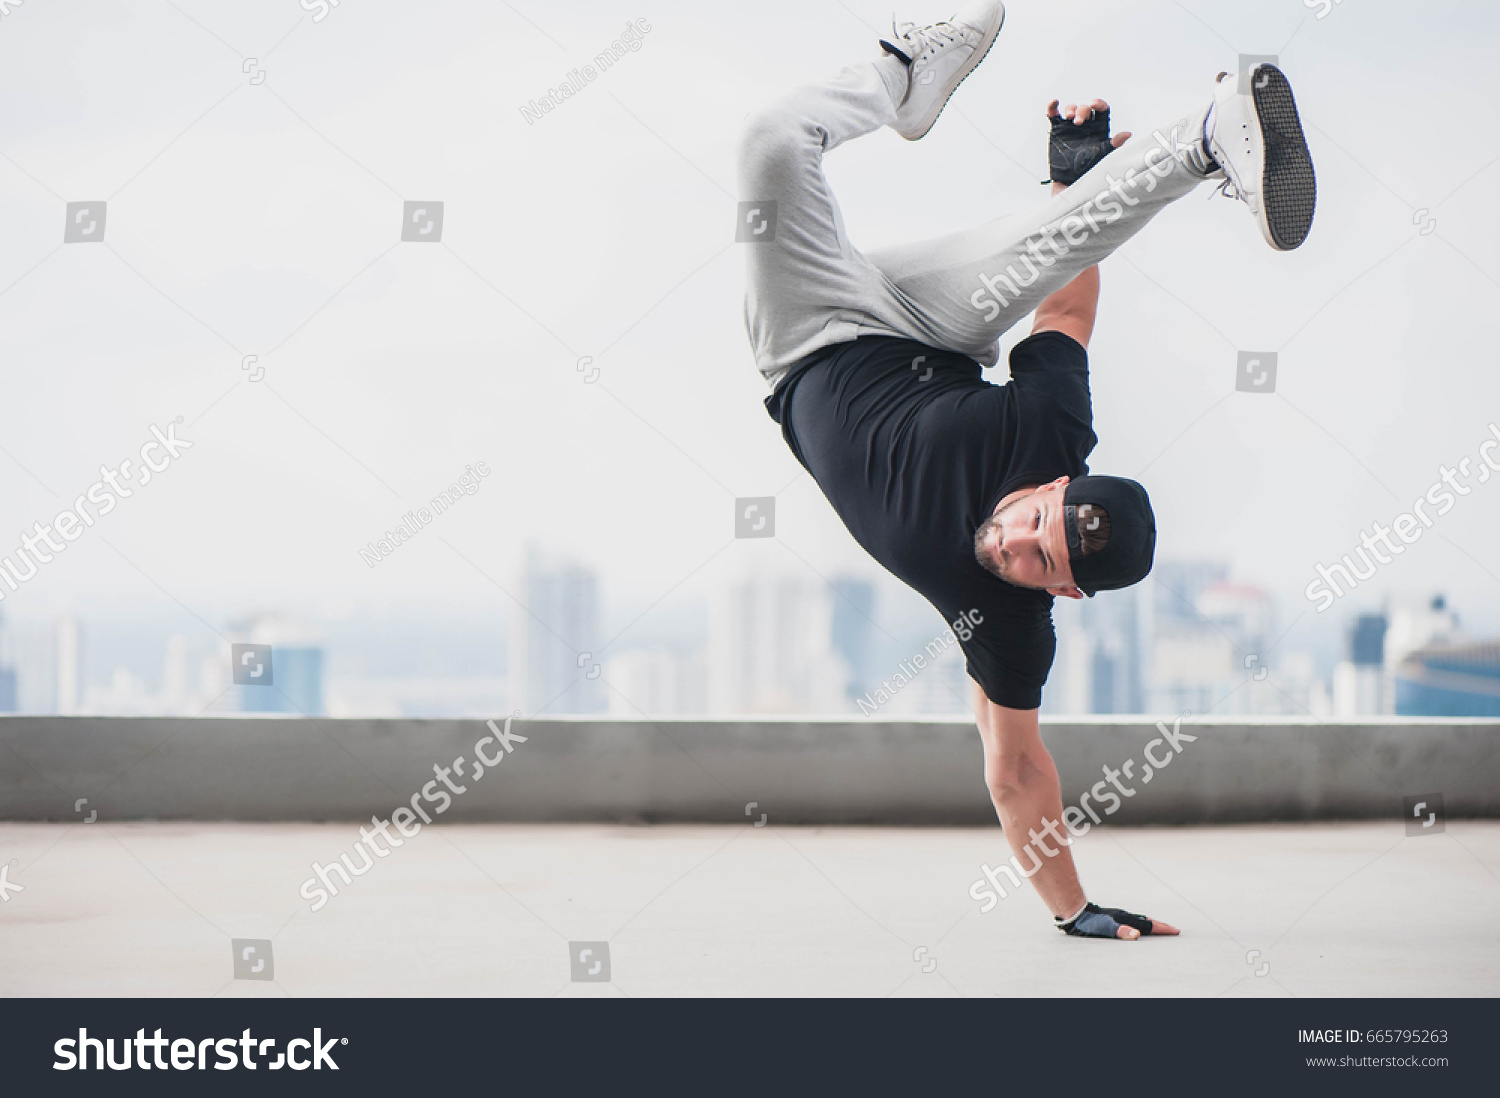 Bboy doing some stunts - Street artist breakdancing outdoors #665795263